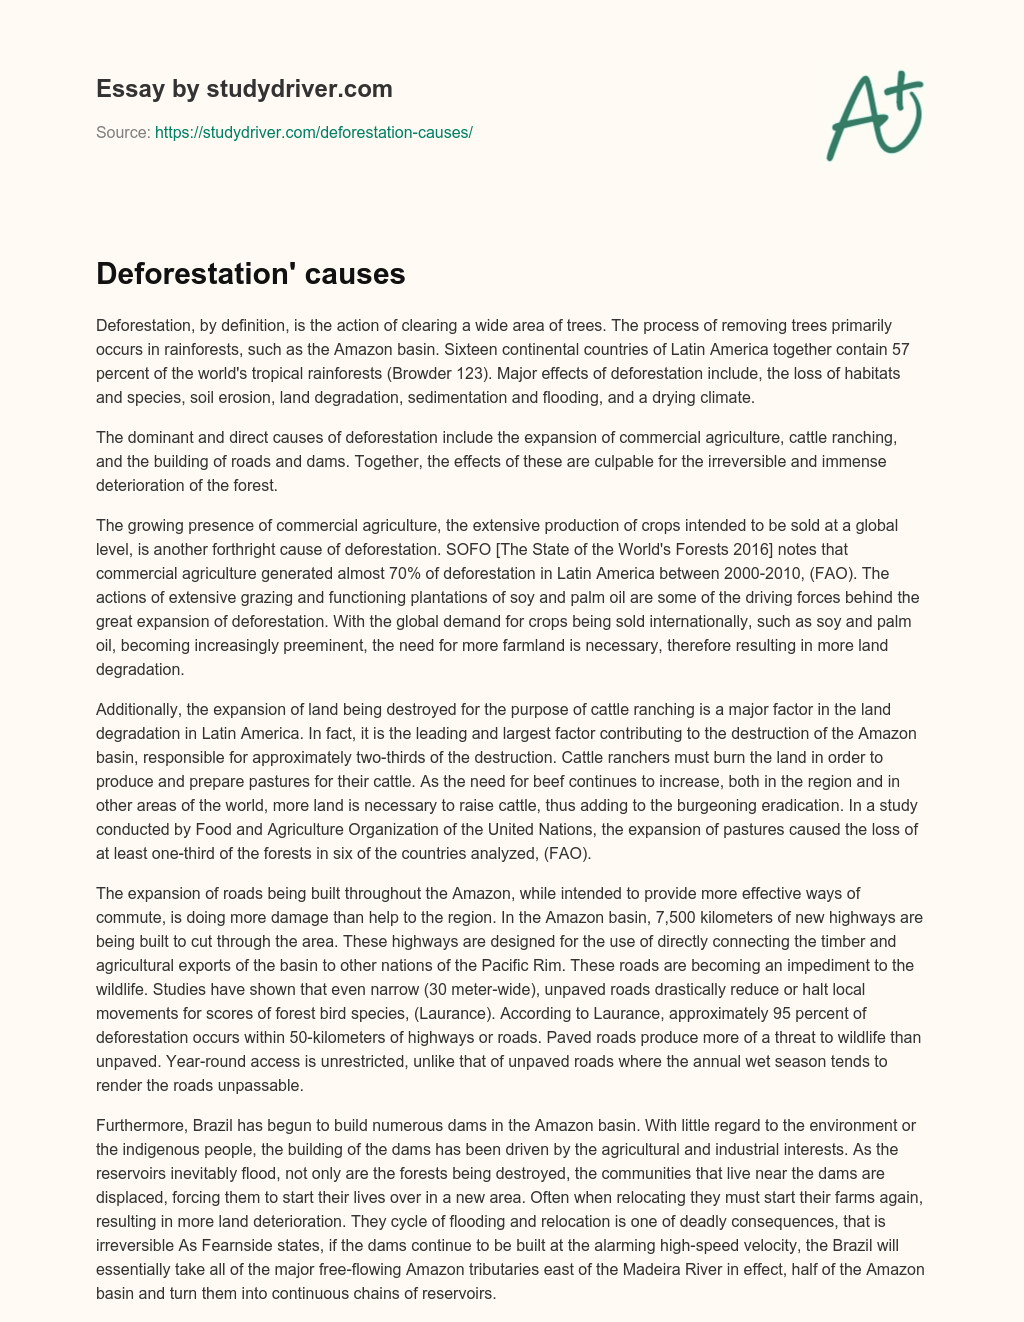 Deforestation’ Causes essay